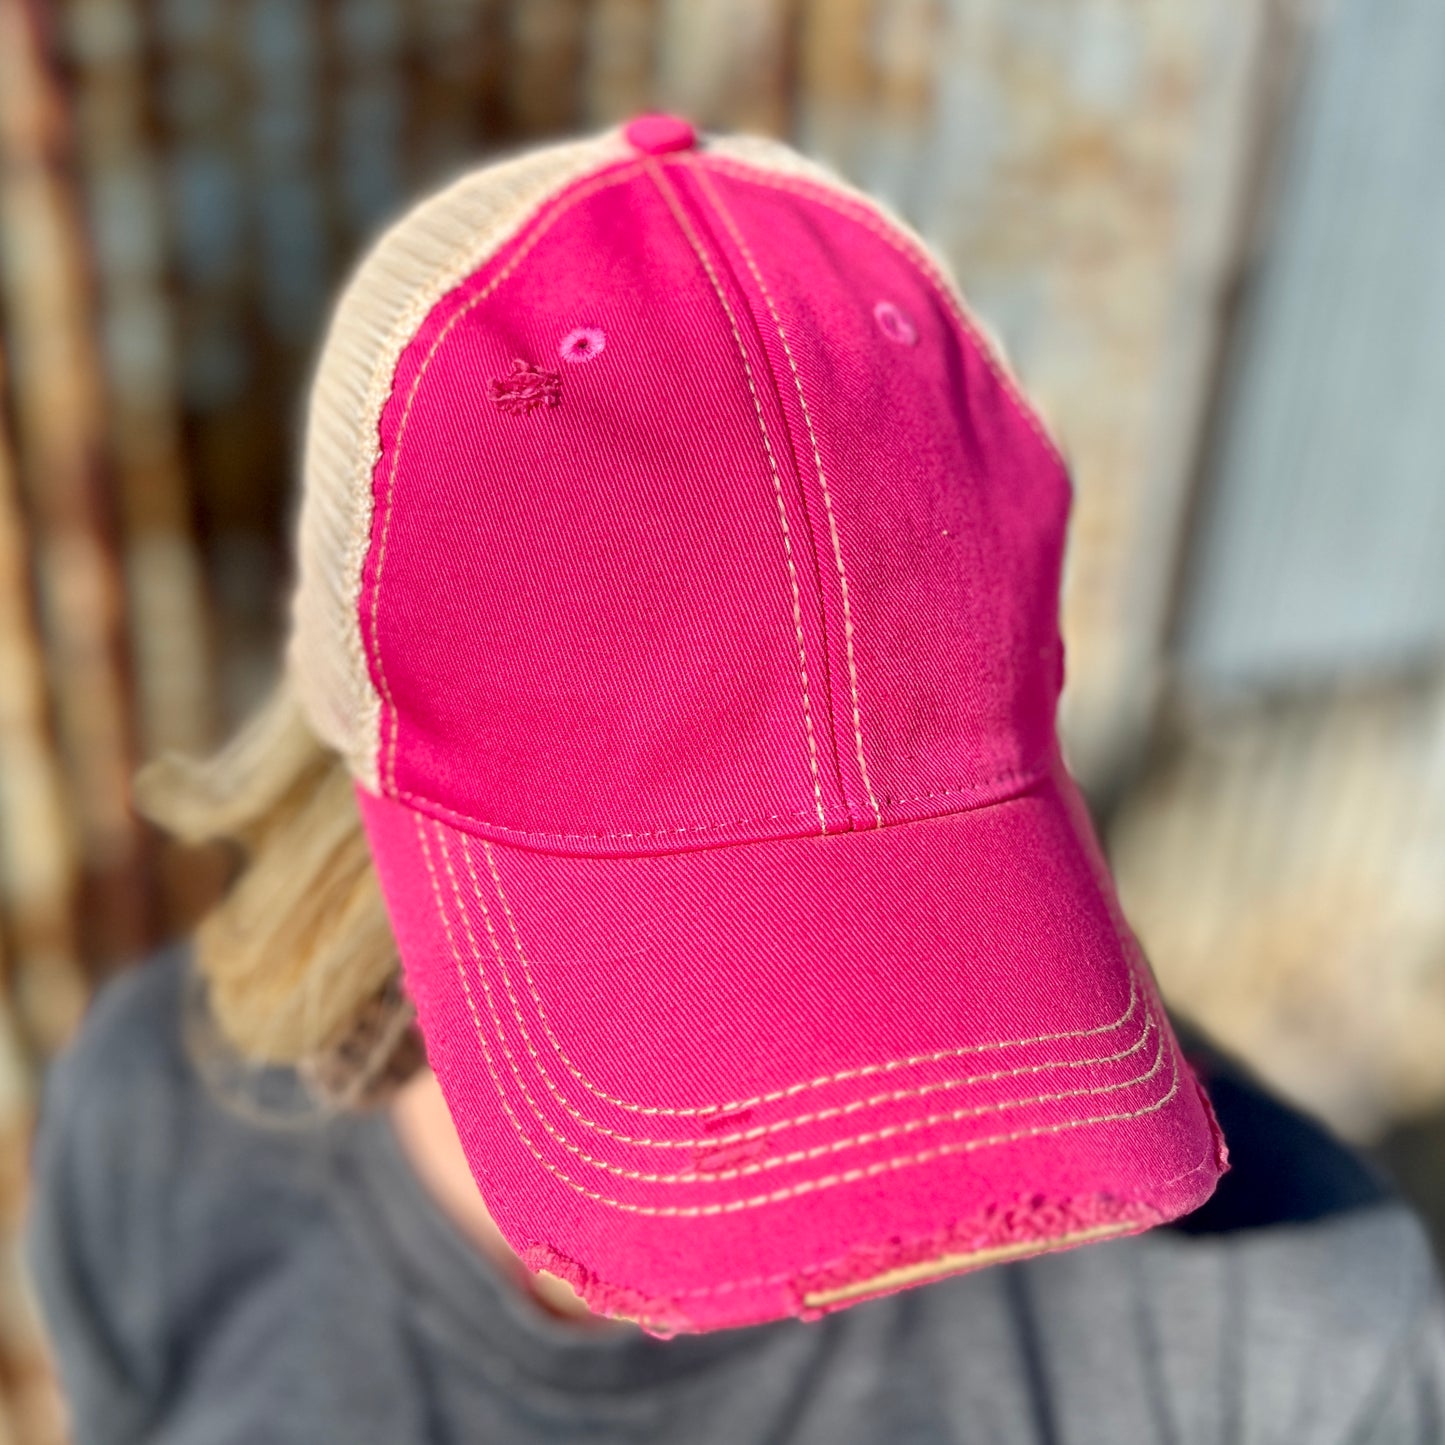 Vintage Washed Hot Pink Distressed Baseball Cap